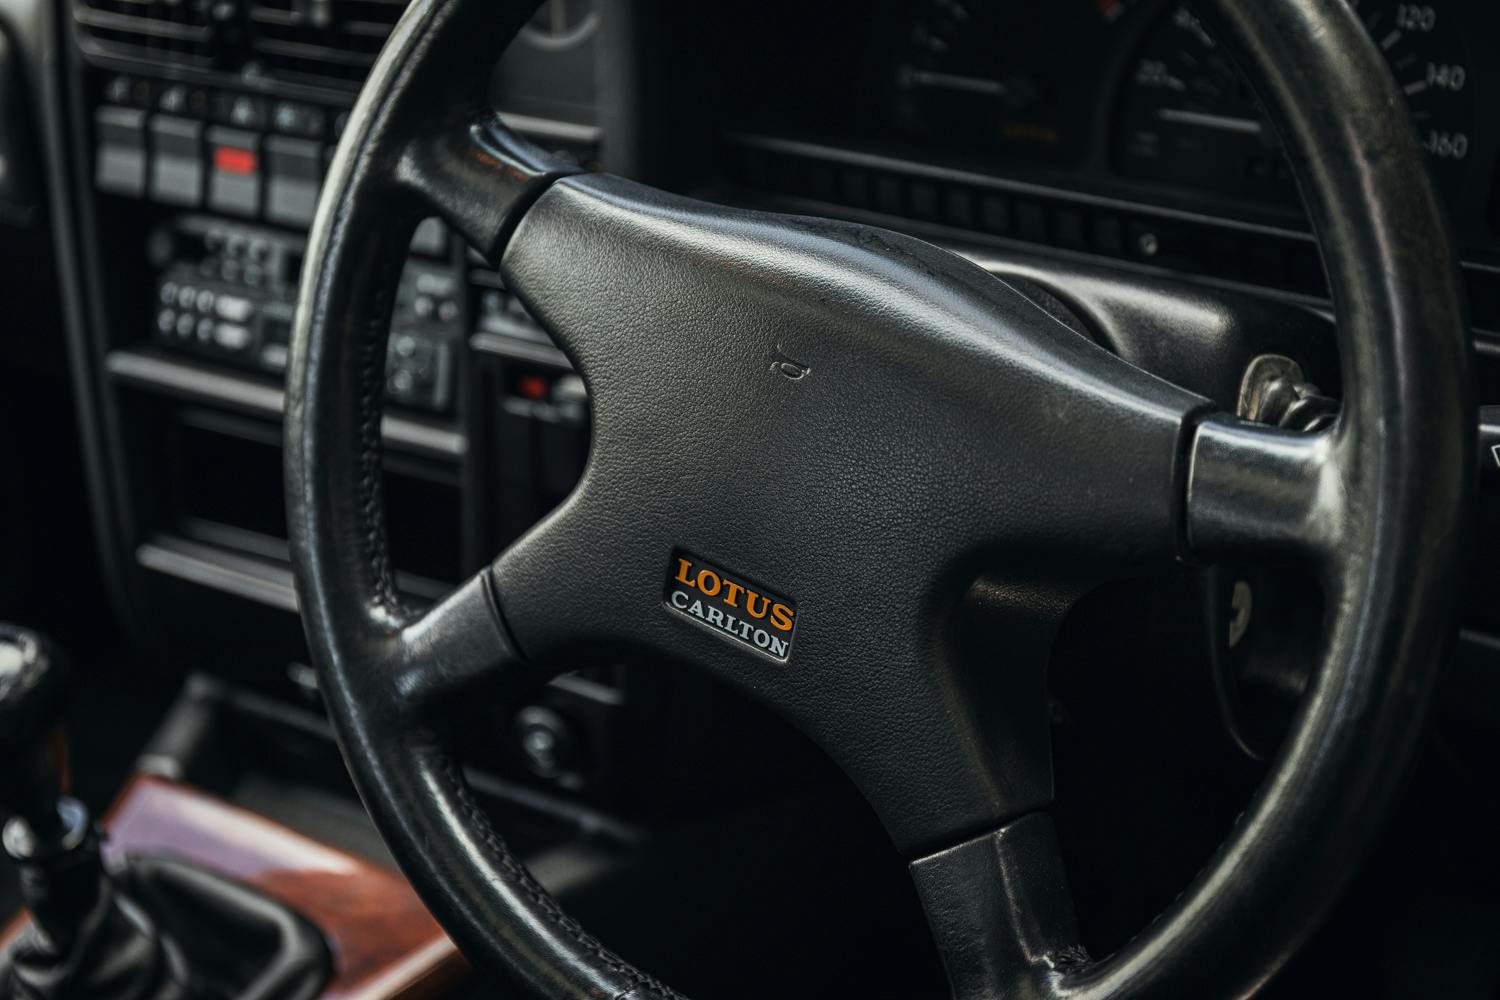 1992 Vauxhall Lotus Carlton Steering Wheel